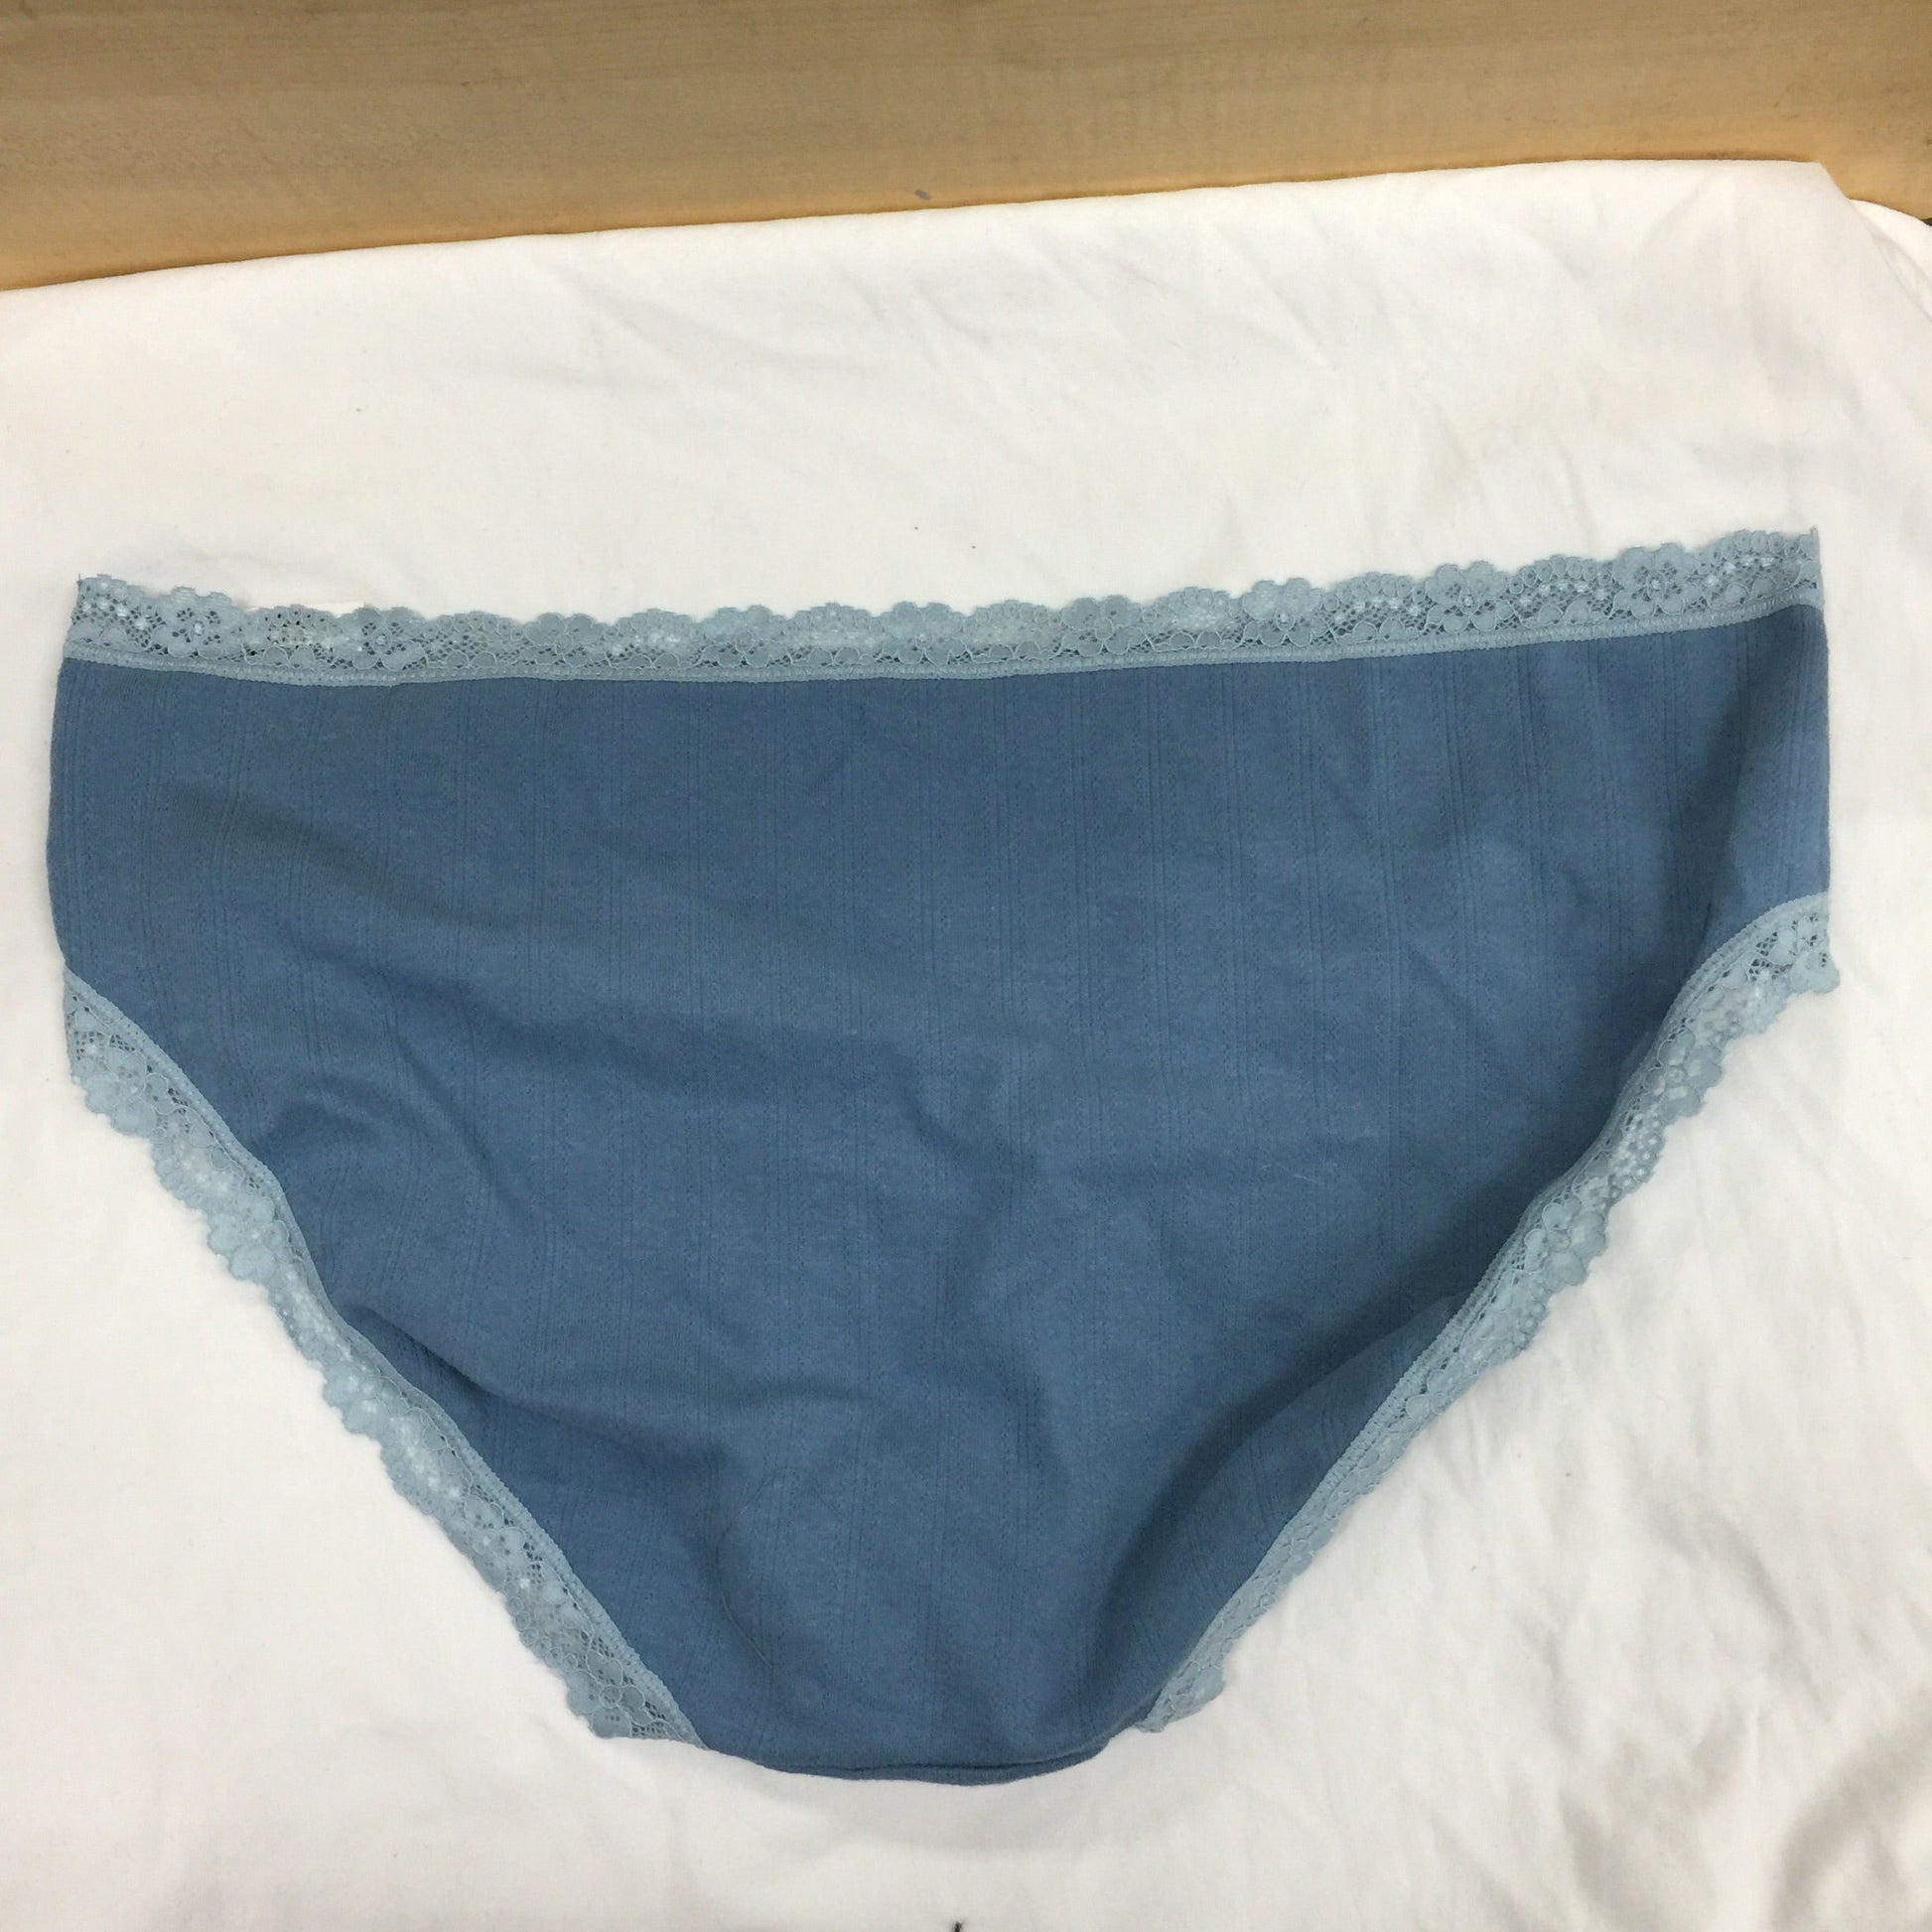 Jenni Women's Cotton Lace Trim Hipster Underwear (XXXL, Blue